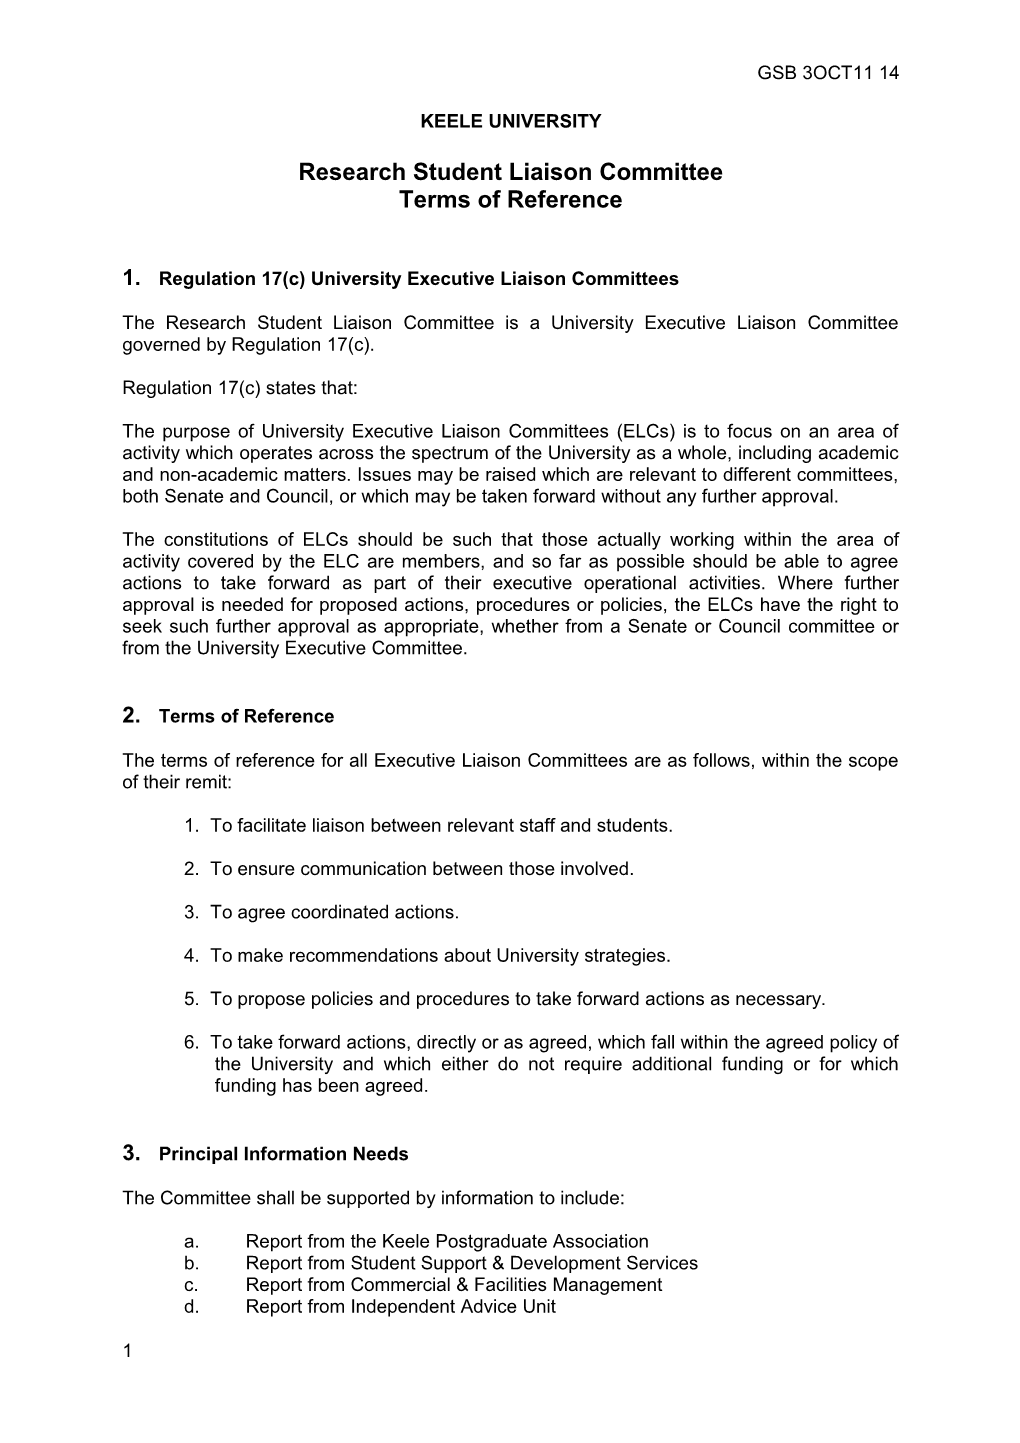 1.Regulation 17(C) University Executive Liaison Committees